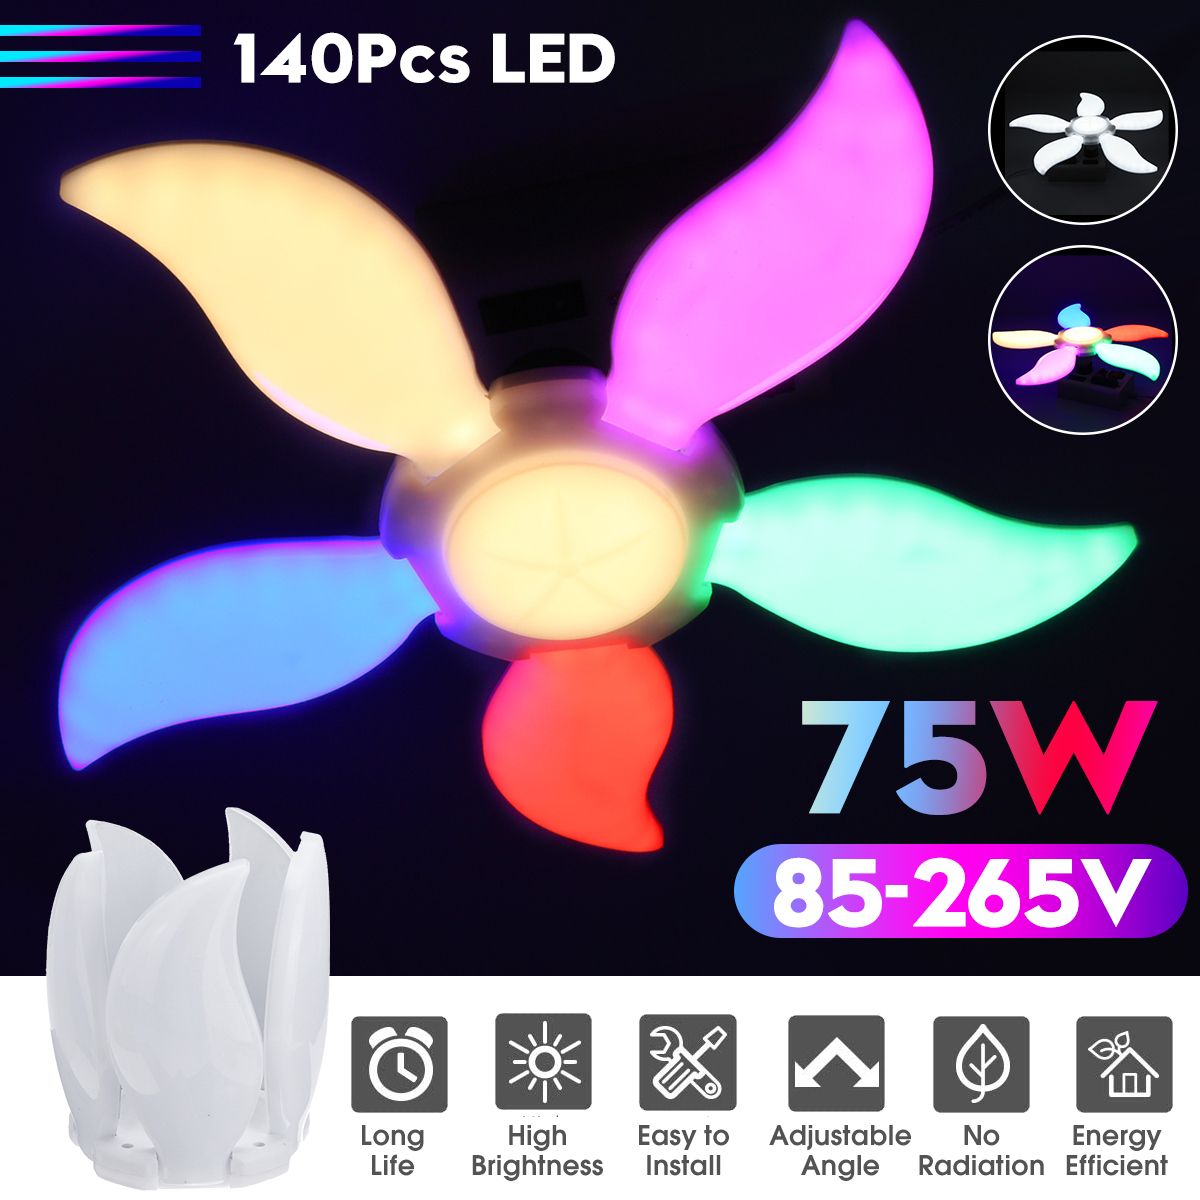 4800LM-5Leaf--E27-LED-Ceiling-Lamp-Universal-Garage-Light-Screw-Fan-Blade-Angle-Adjustable-Deformati-1686071